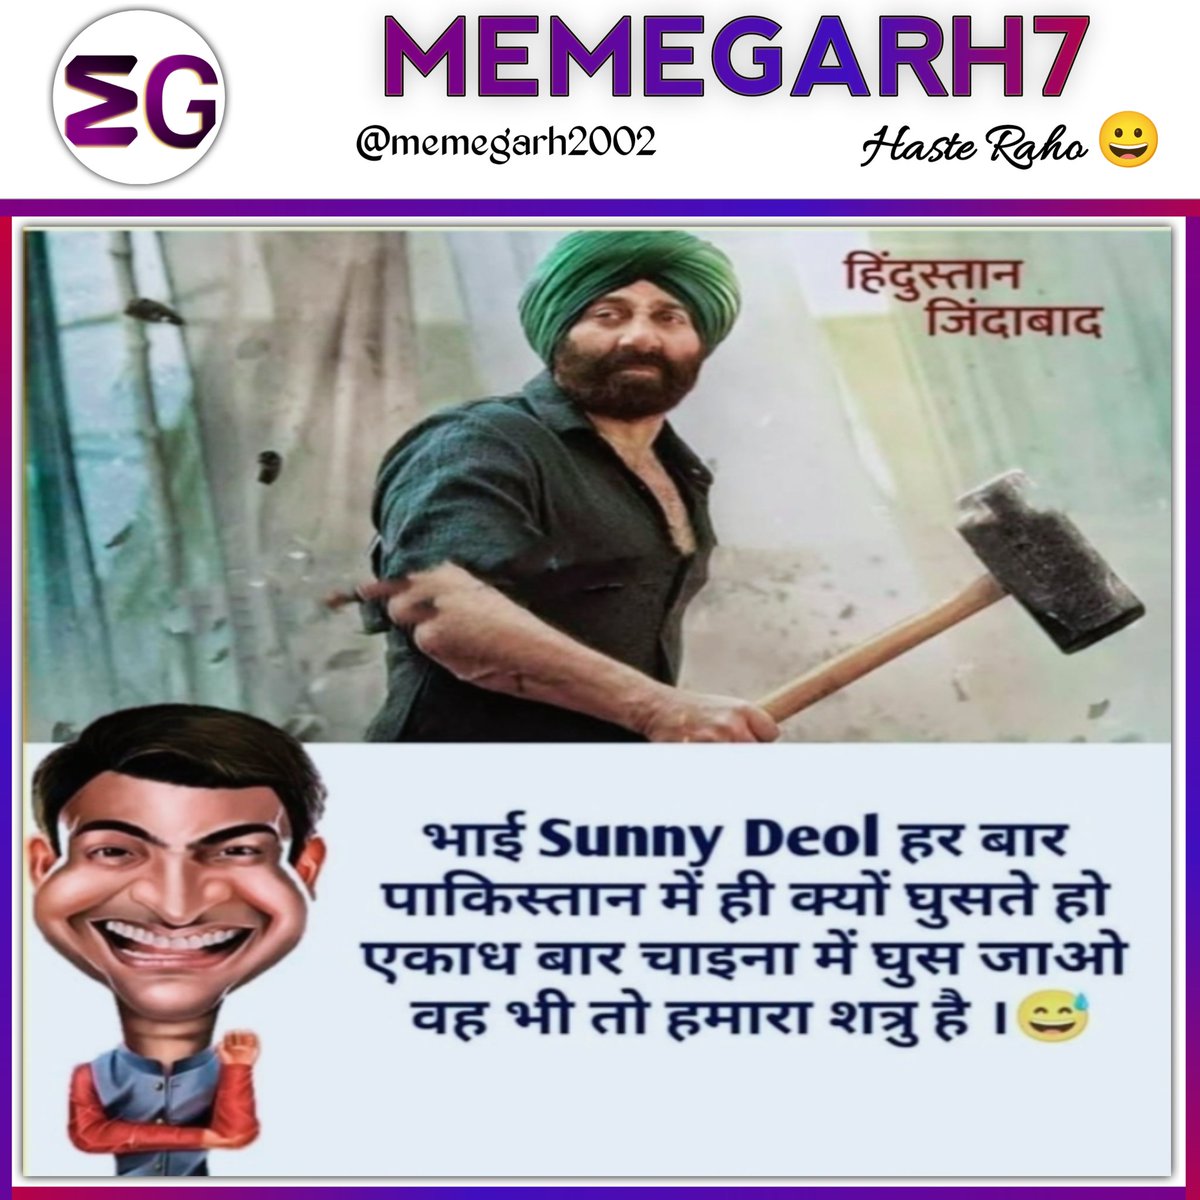 Meme on Gadar 2 .
#Gadar2 #SunnyDeol #amishapatel #Memes #Gadar #film #viralfilm #trendingmovie #viralmovie #indiancinema #funniest #funnymeme #memegarh7